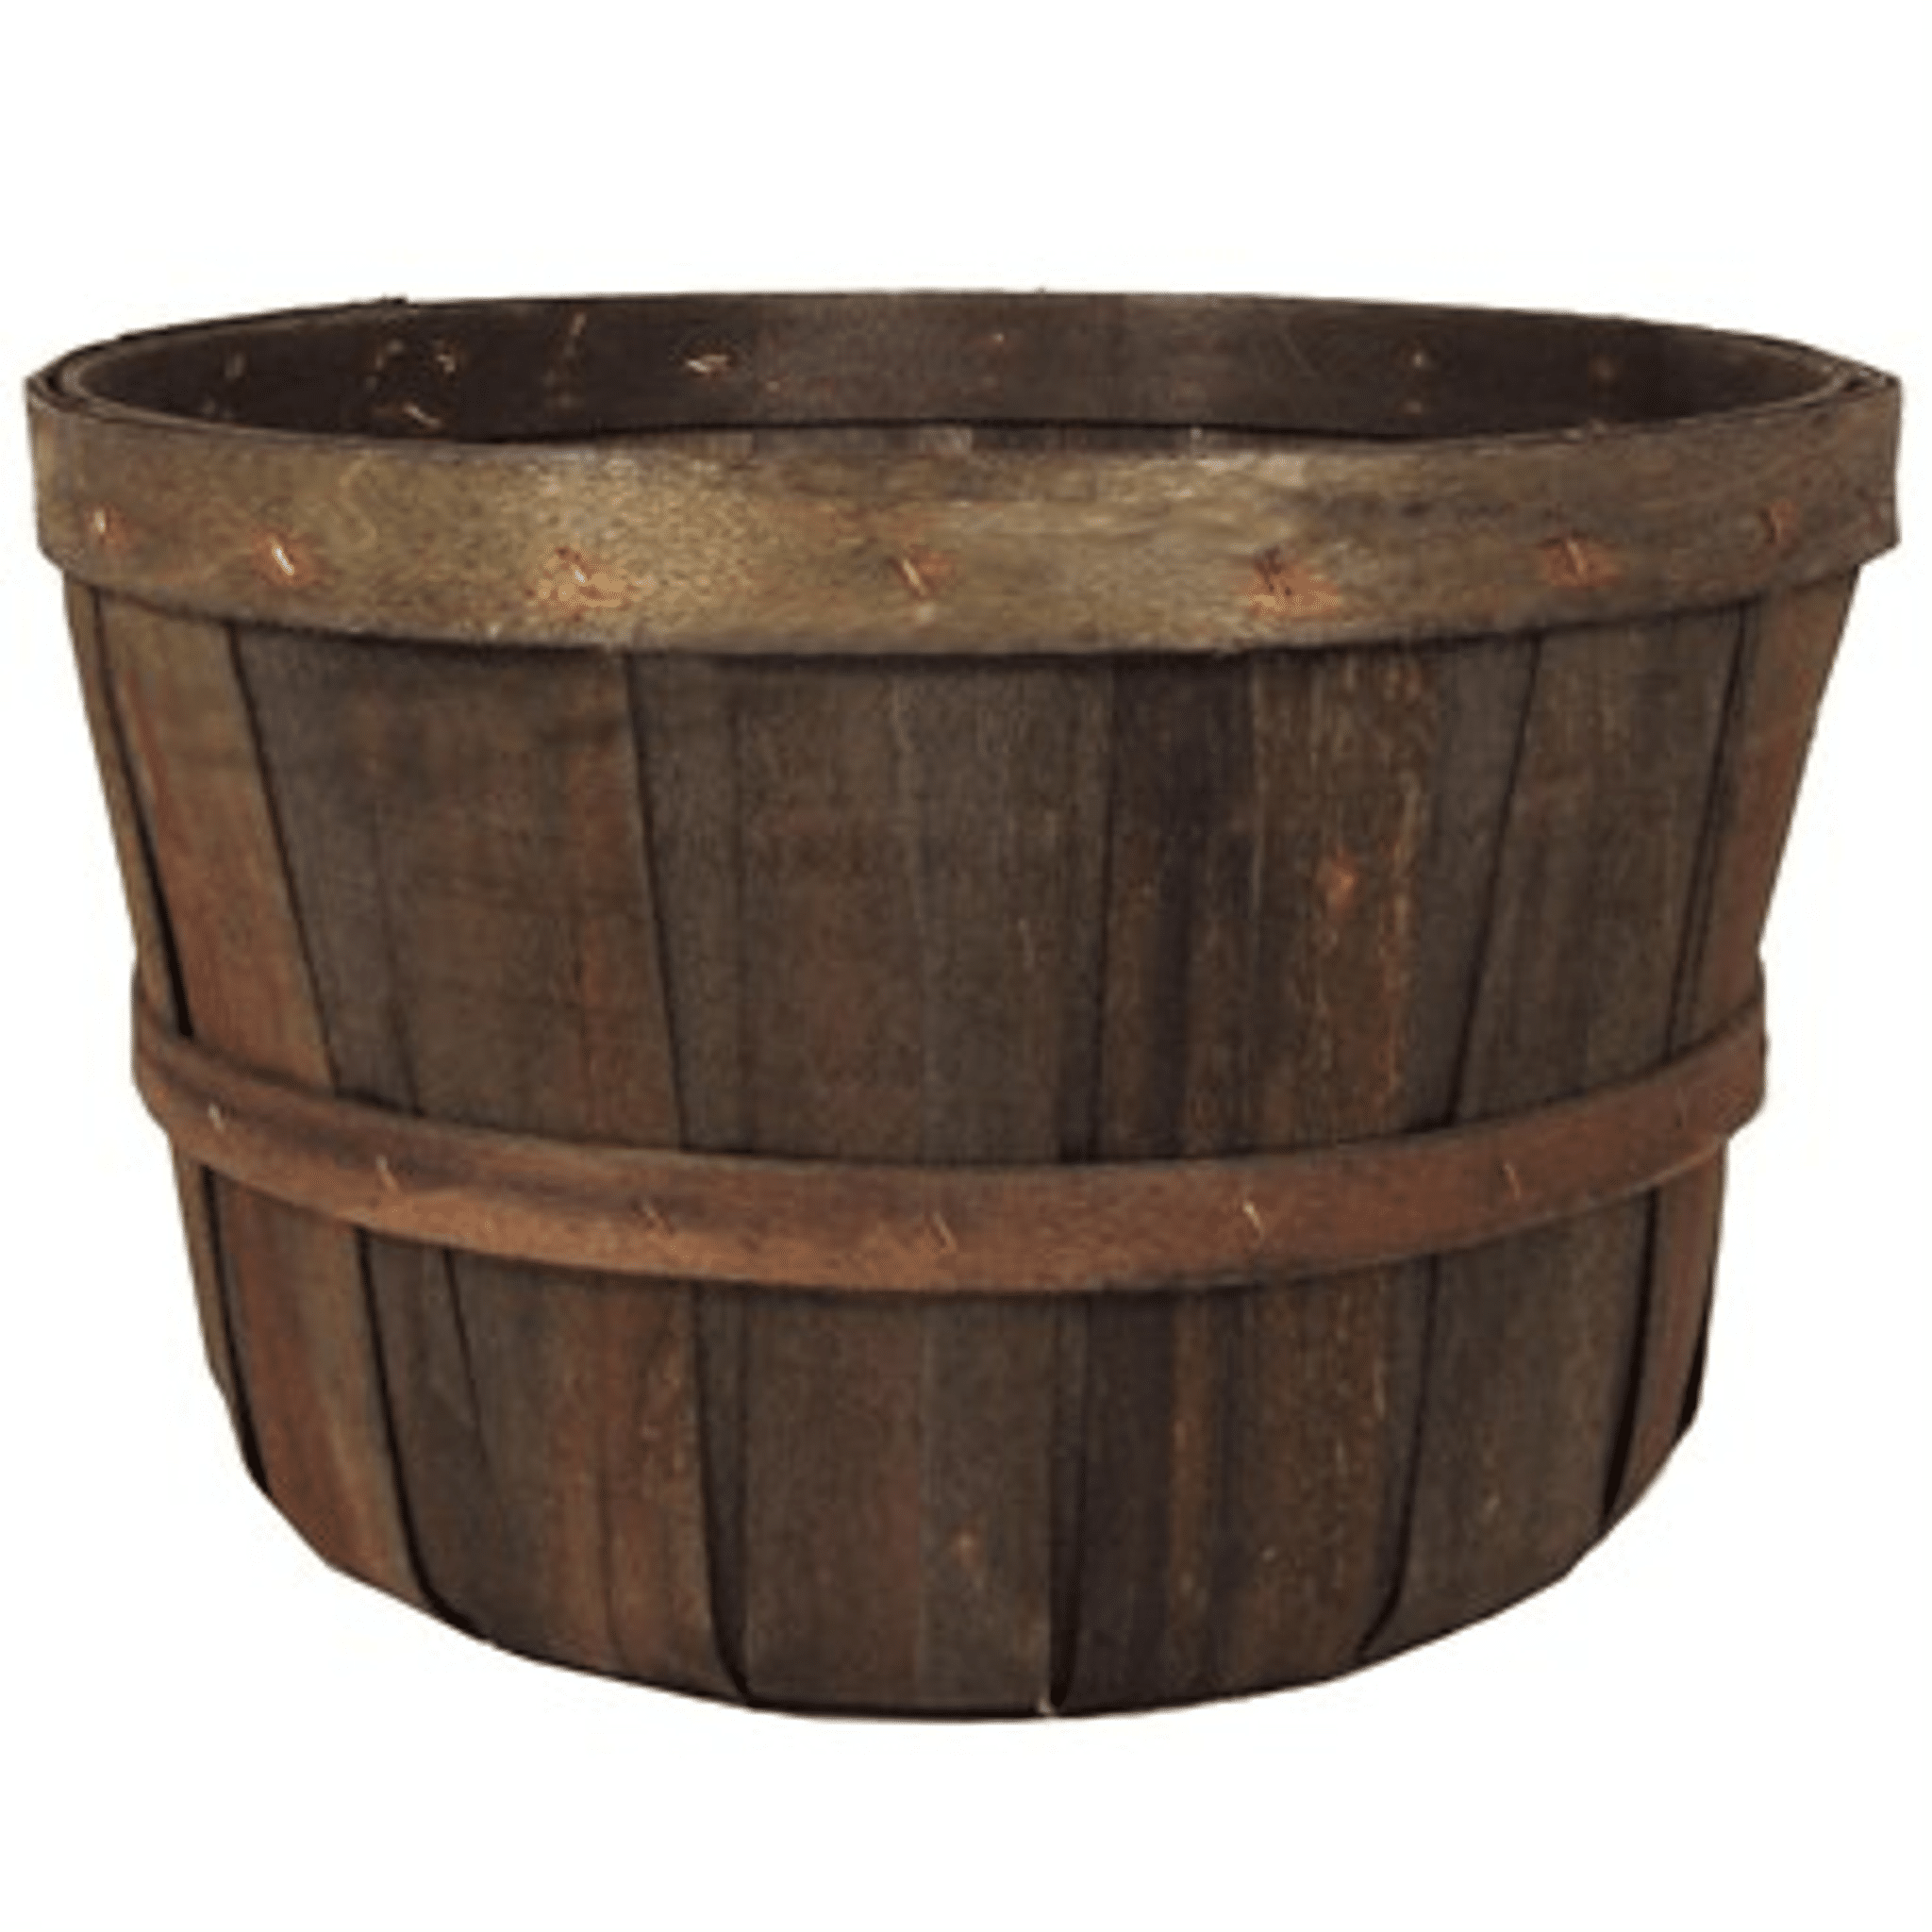 Untreated wood flower pot